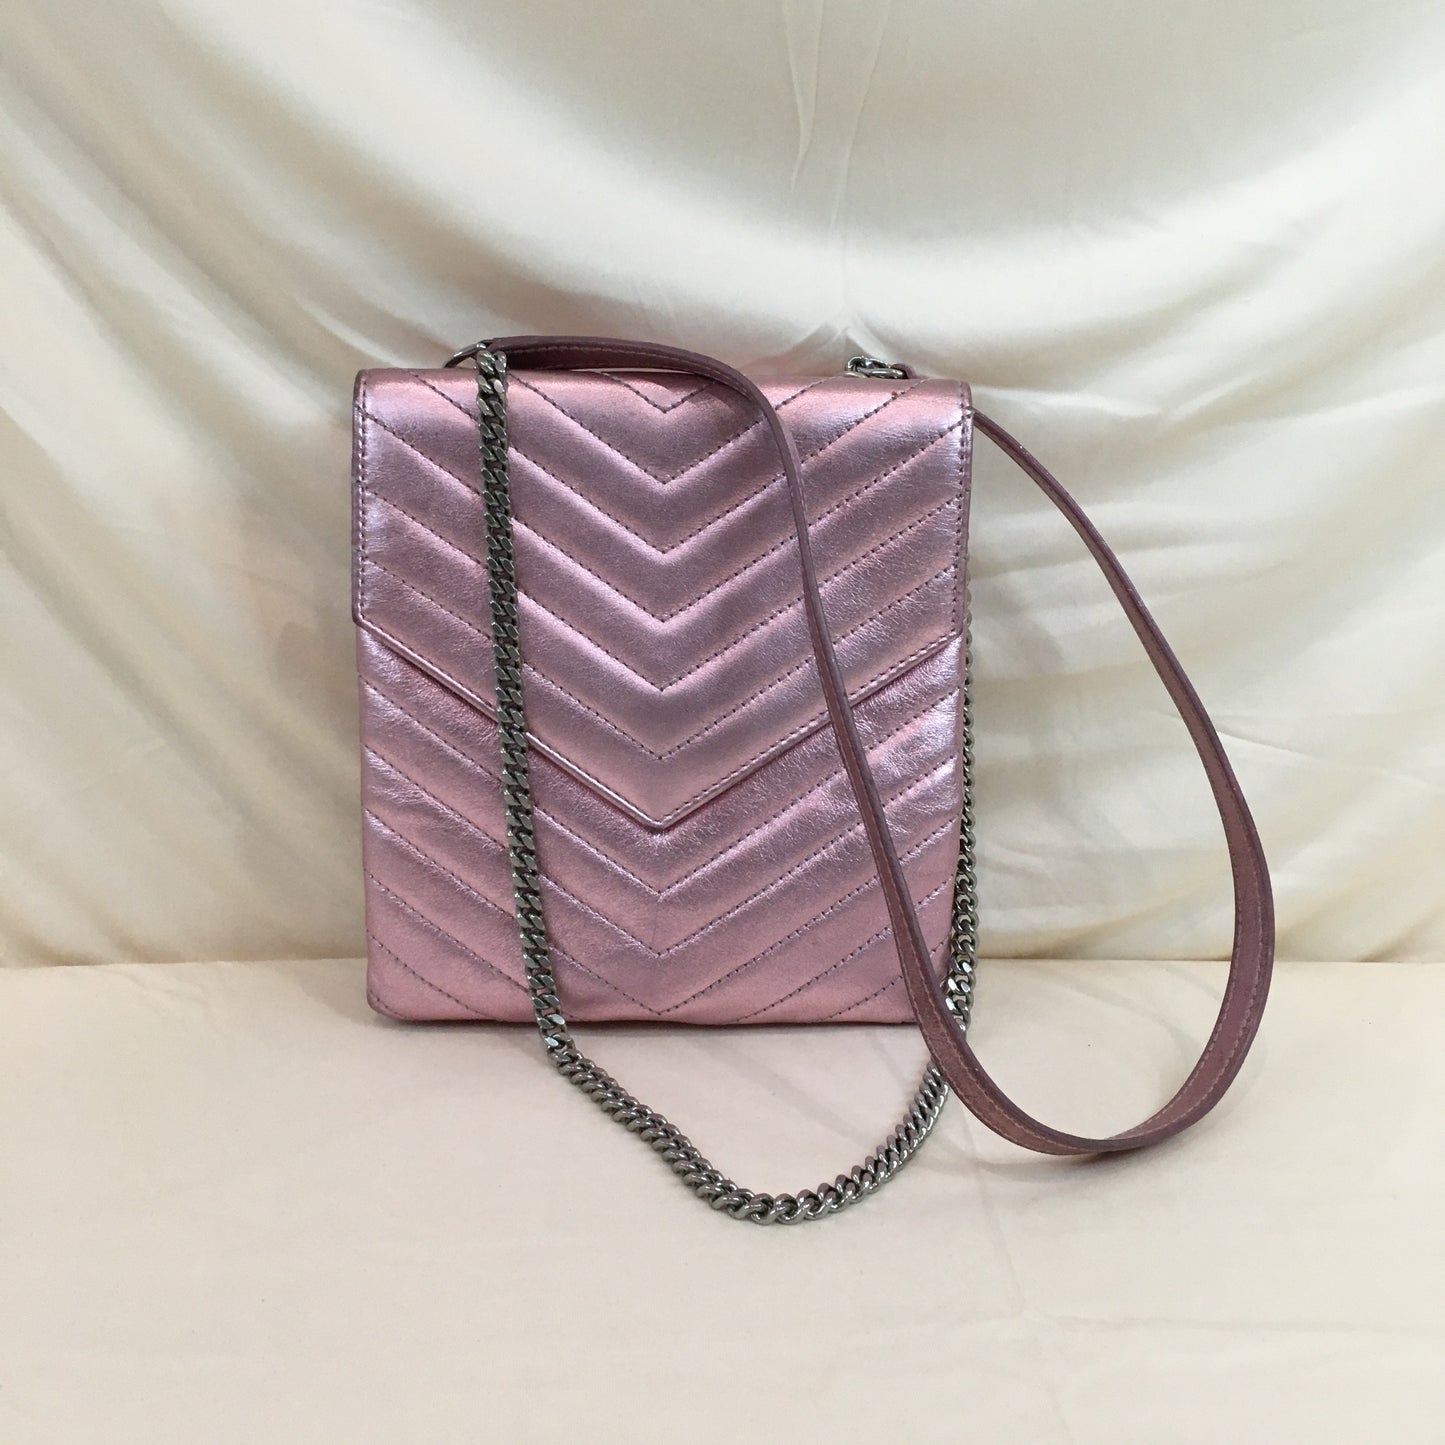 Yves Saint Laurent Pink Calfskin Double Flap Crossbody Bag Sku# 70066